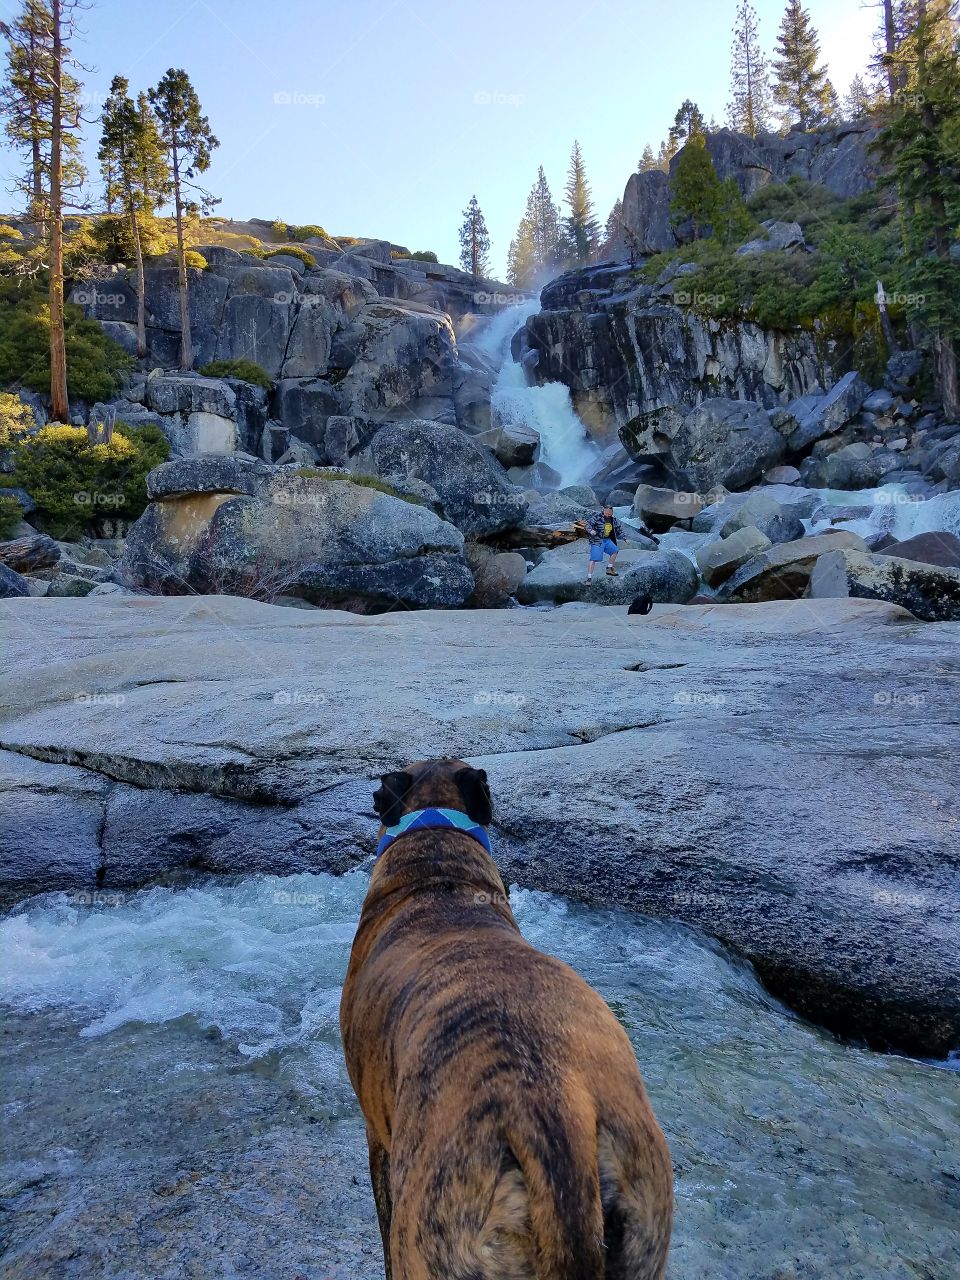 Springtime waterfall with my hiking buds